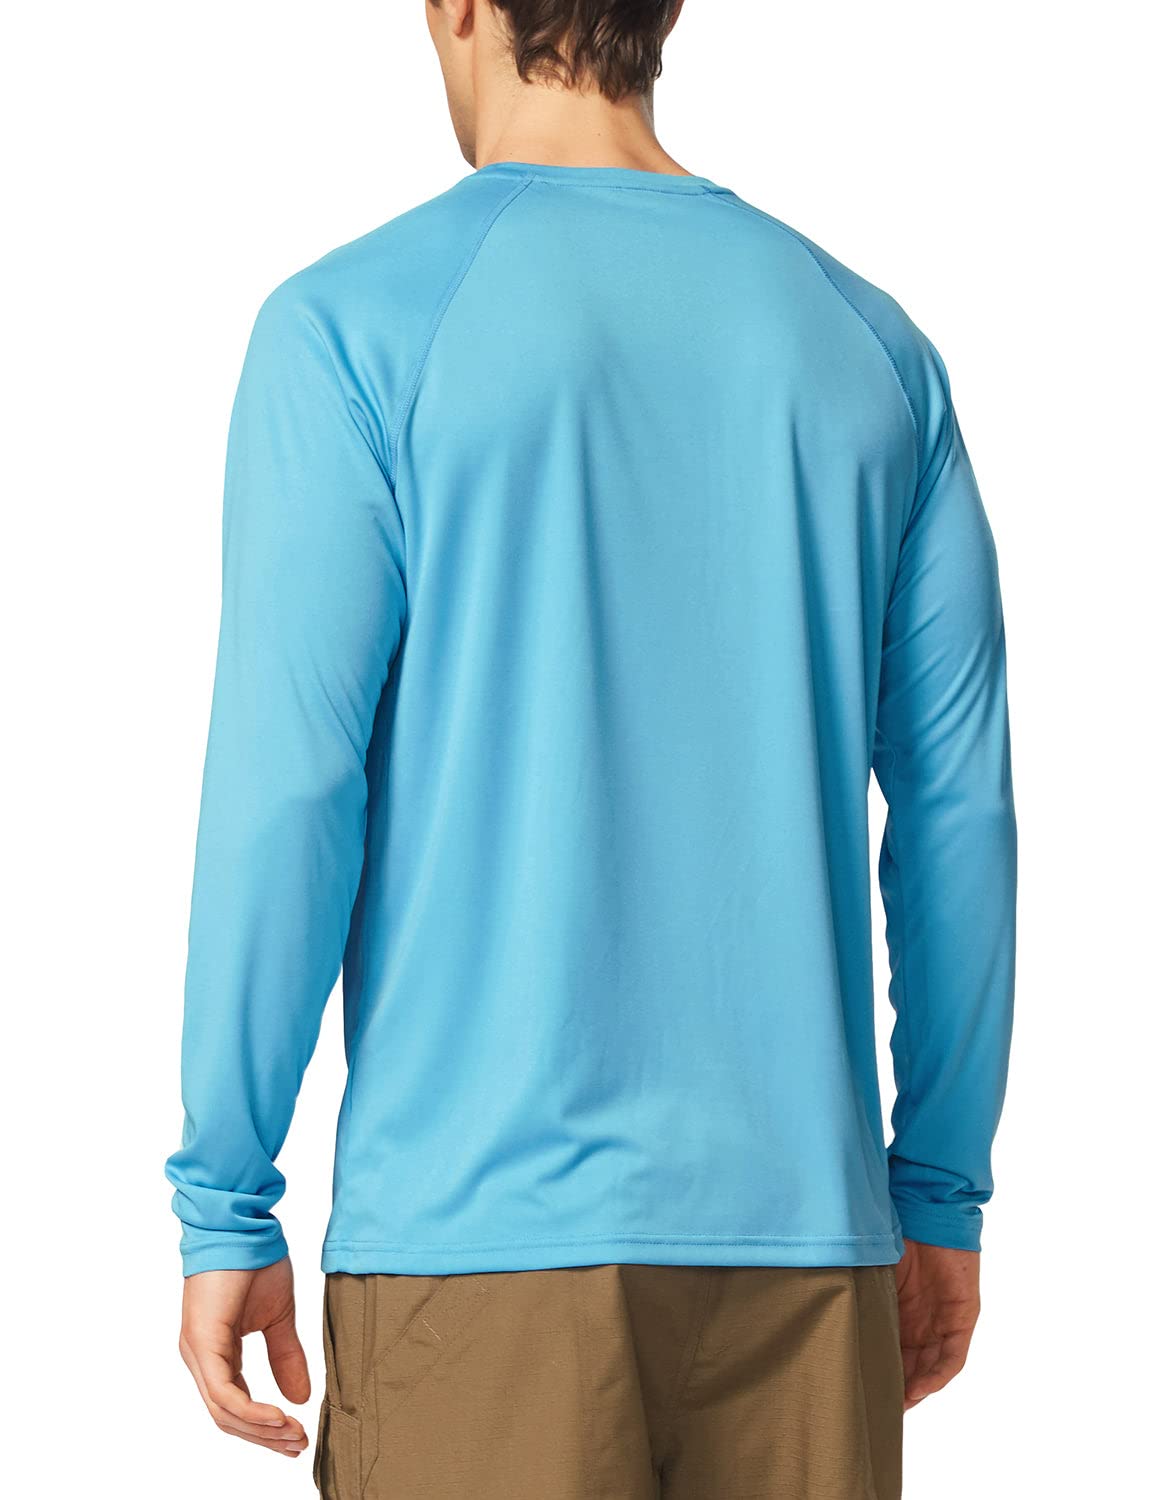 BALEAF Men's Sun Protection Shirts UV SPF UPF 50+ Long Sleeve Rash Guard Fishing Running Quick Dry Lightweight